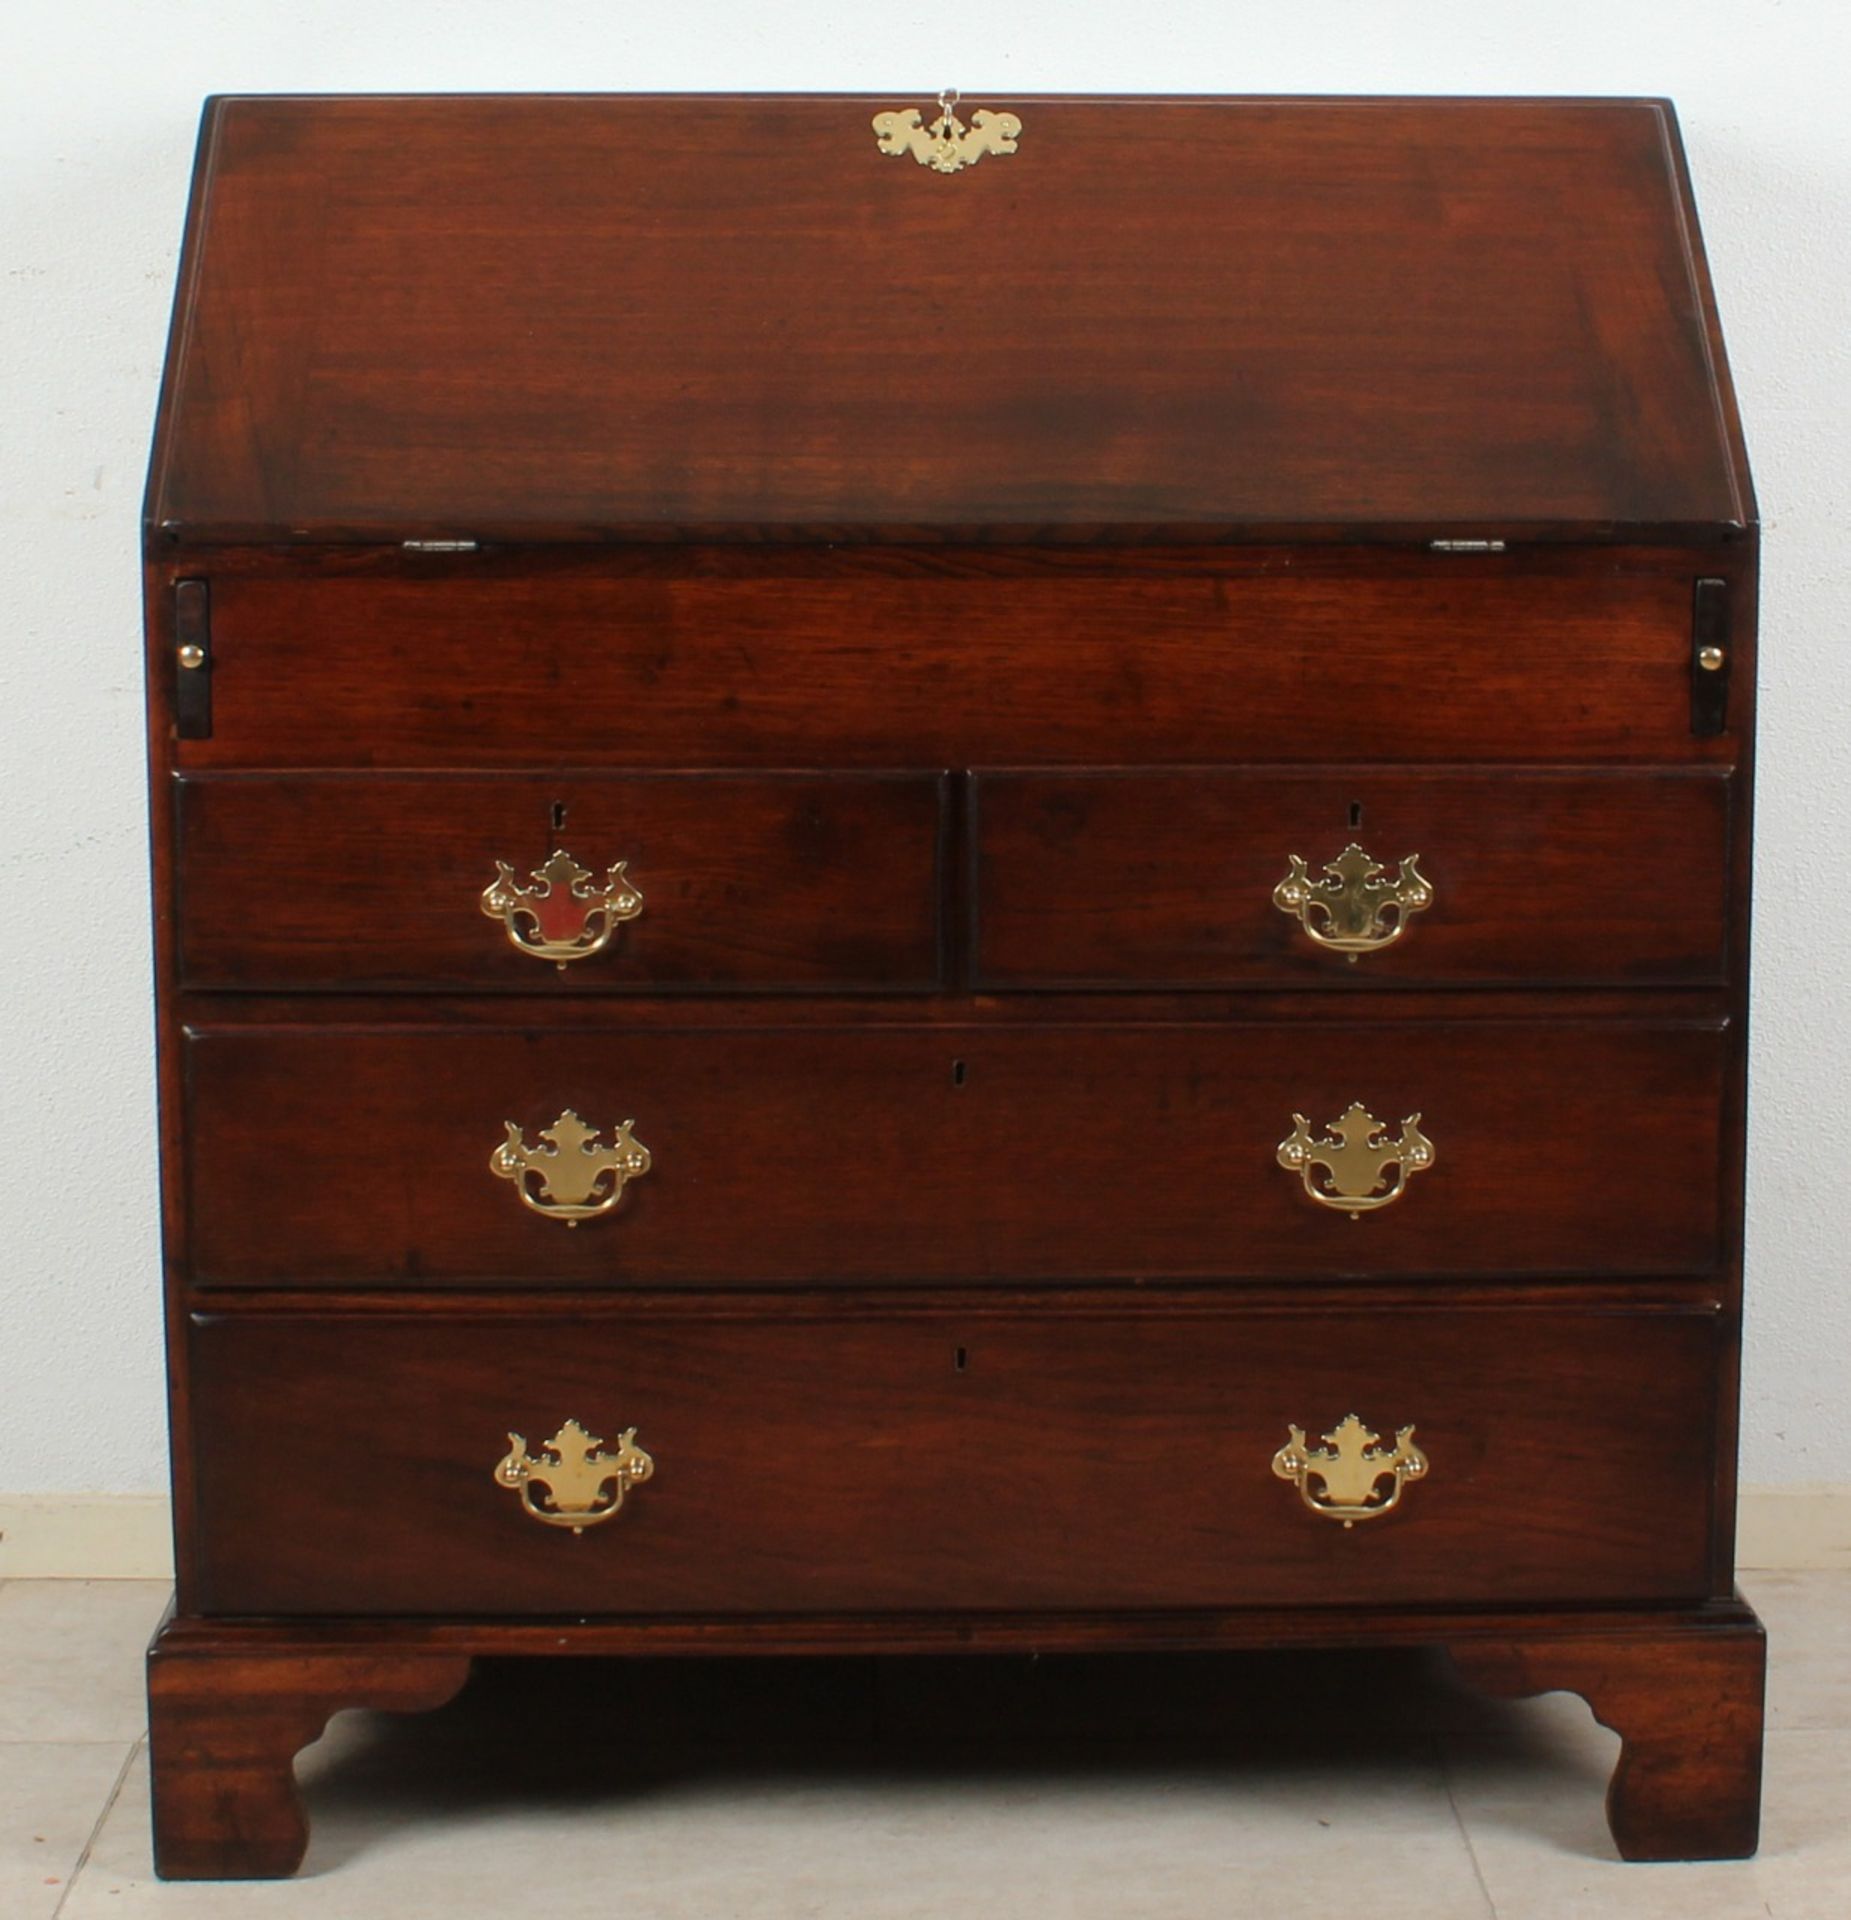 Beautiful English oak writesecretaire style furniture 20th century, in very good condition, nice